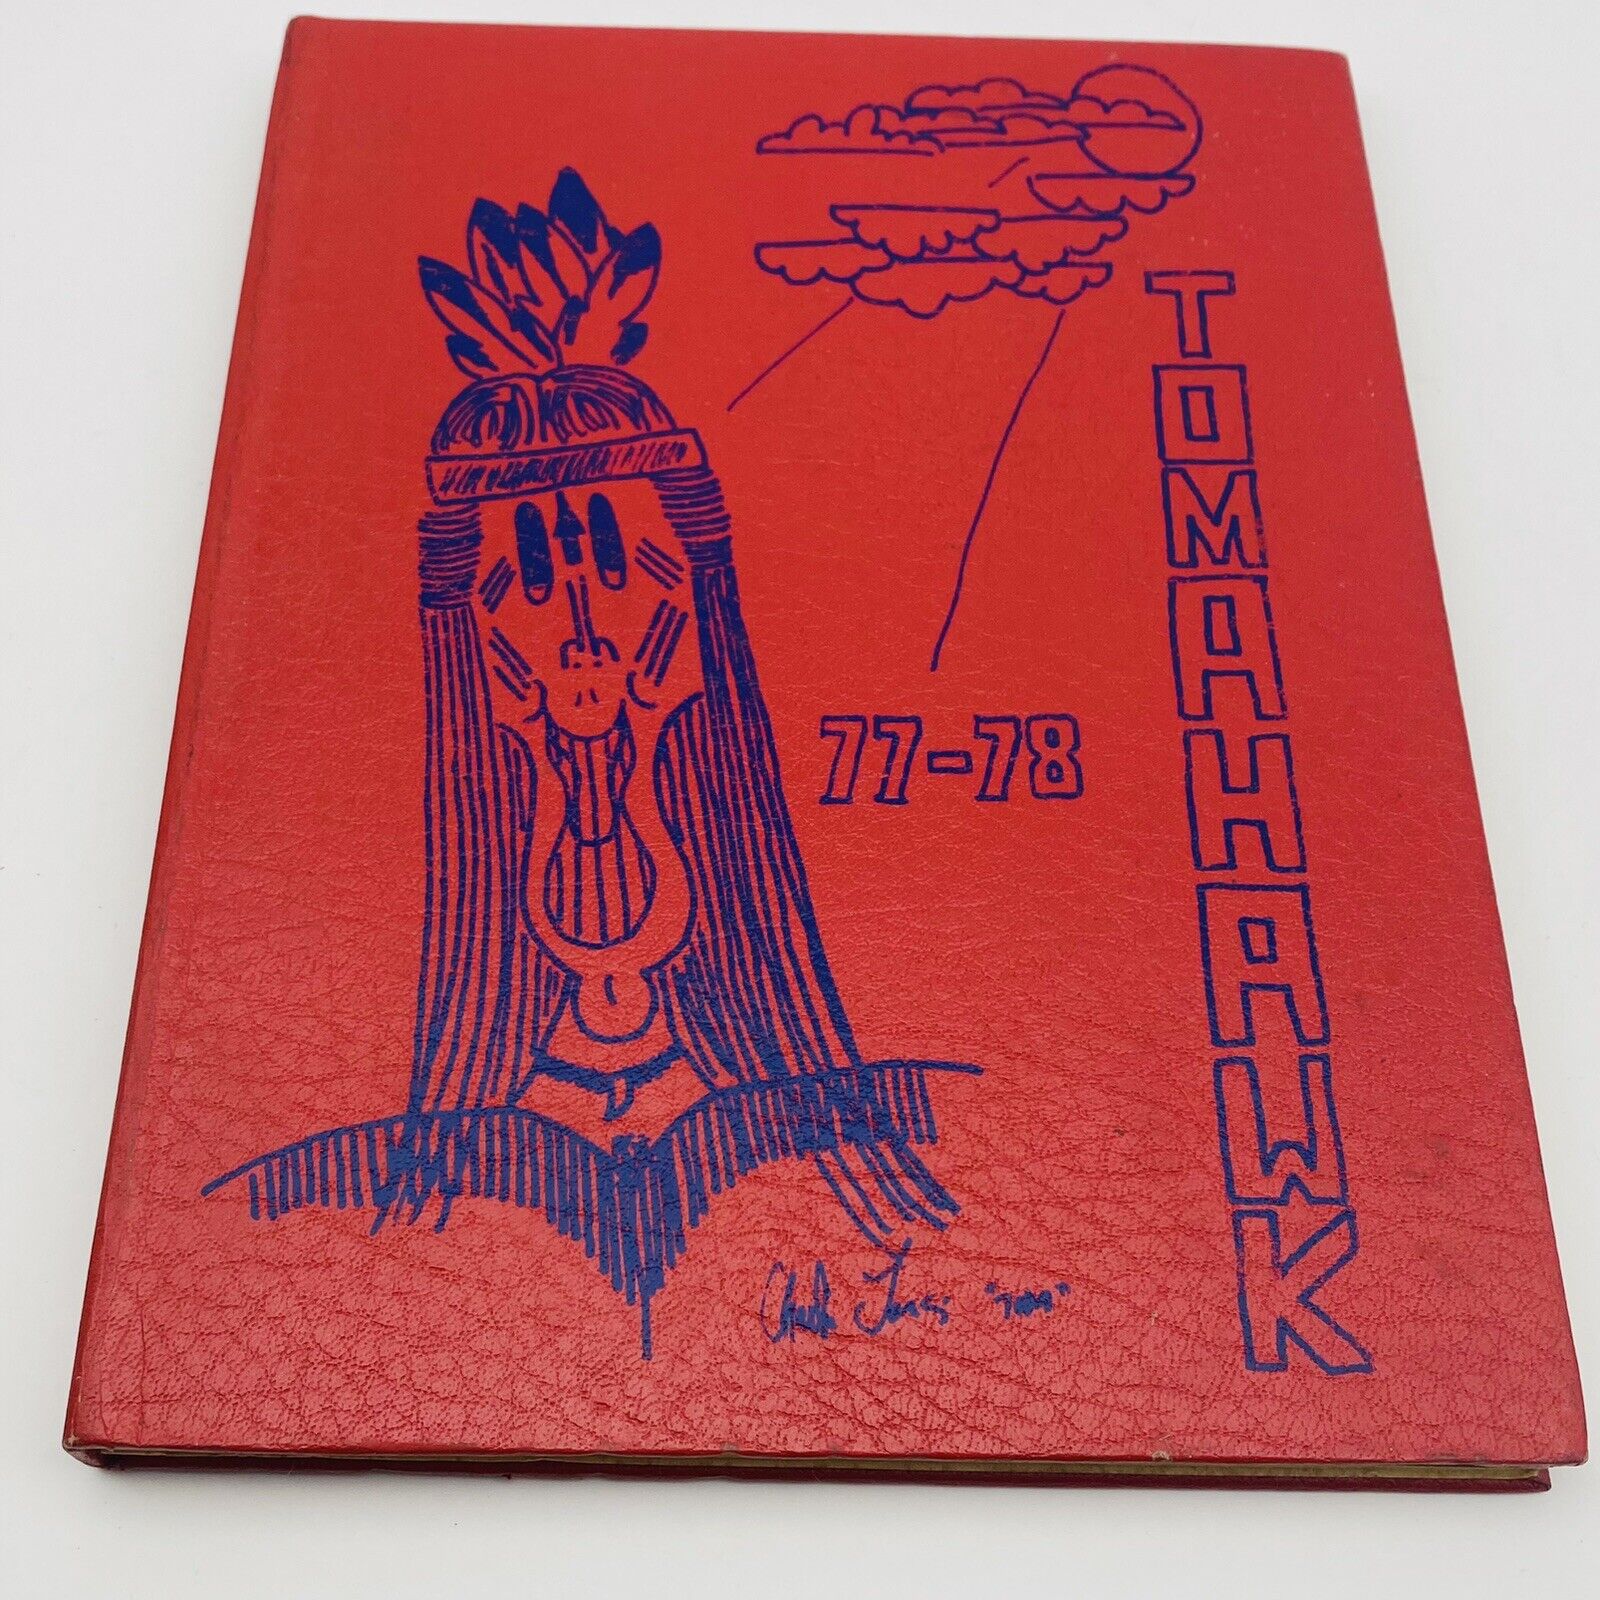 Tamahawk Washington, DC yearbook 1977-1978